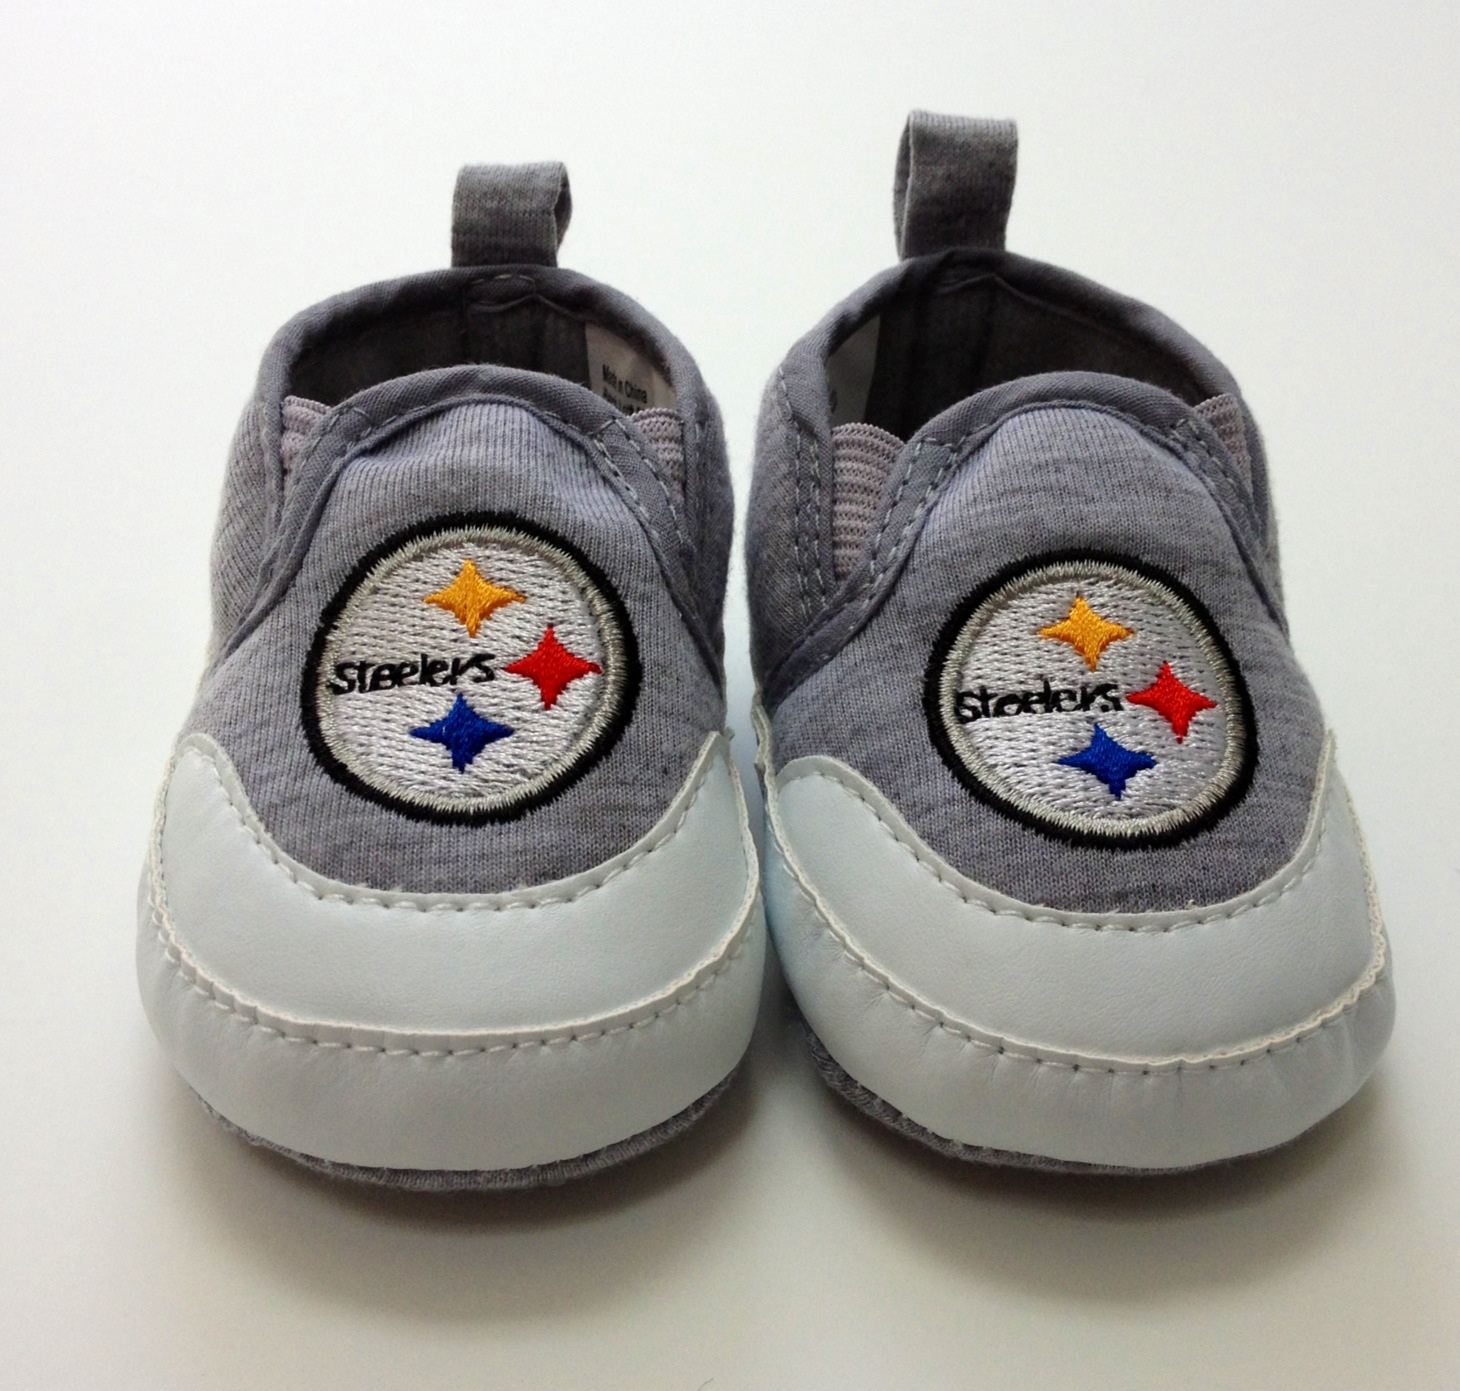 Steelers Baby Pre-Walker Shoes